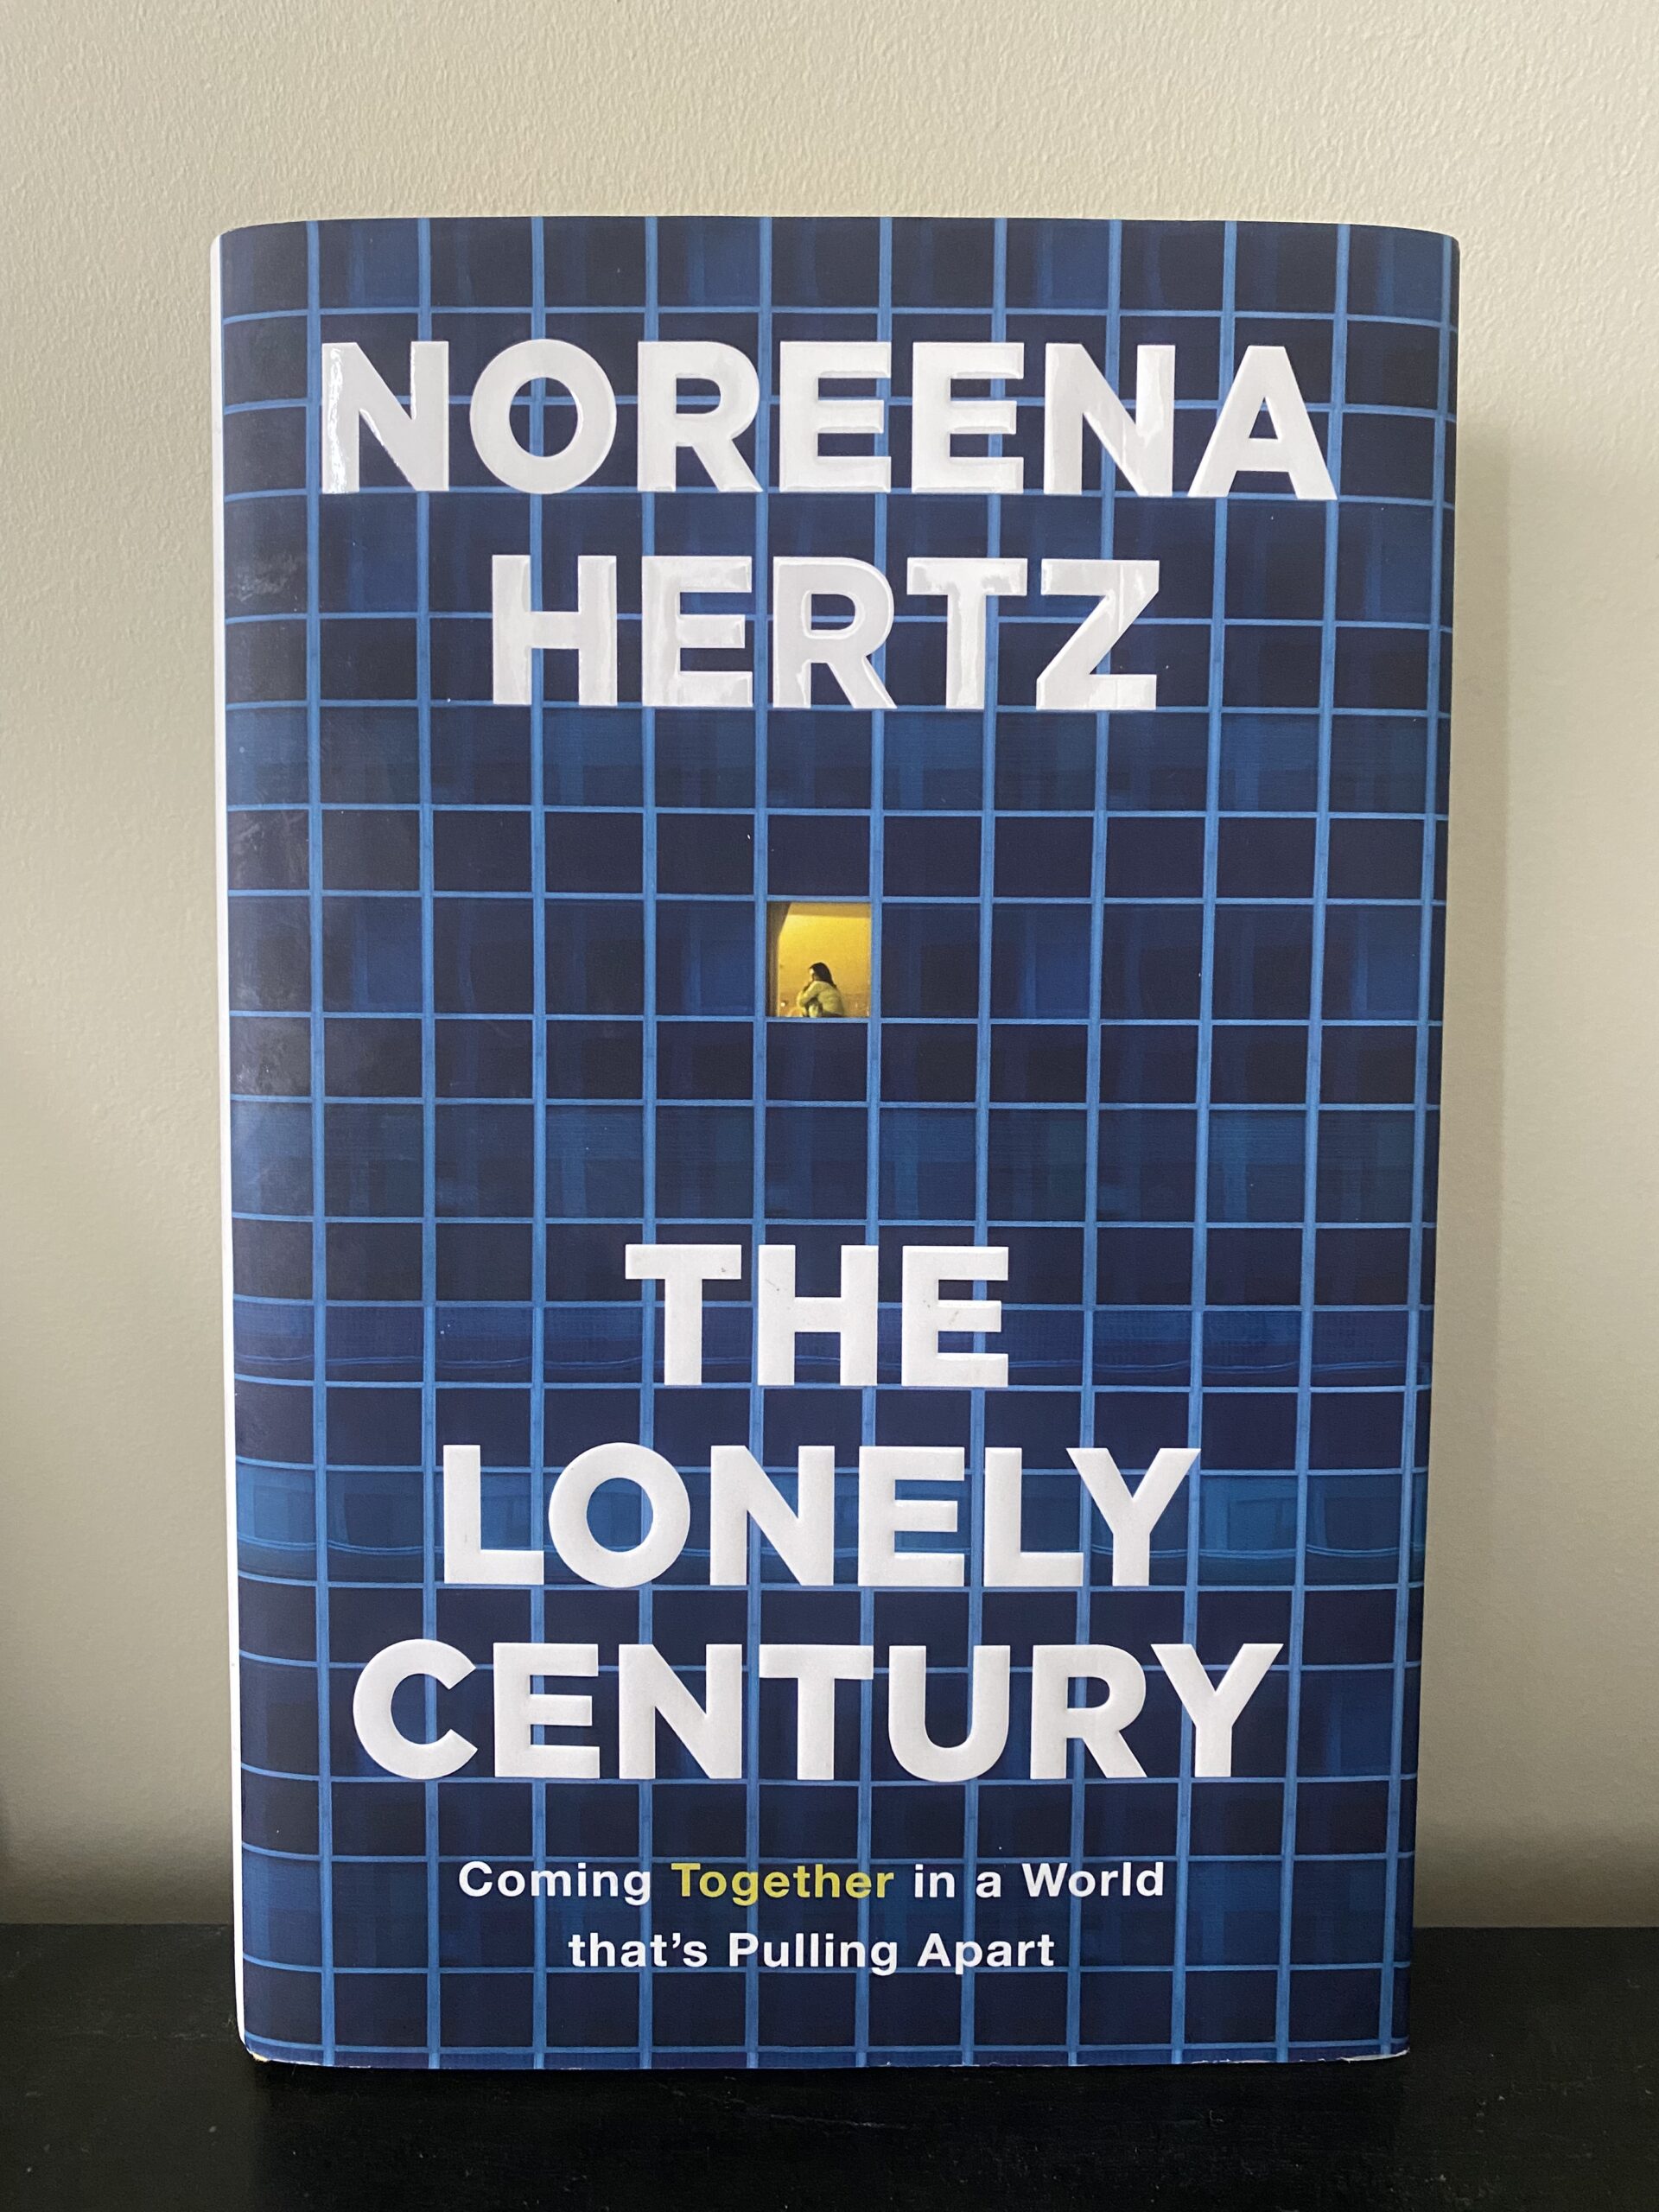 The Lonely Century by keynote speaker Noreena Hertz